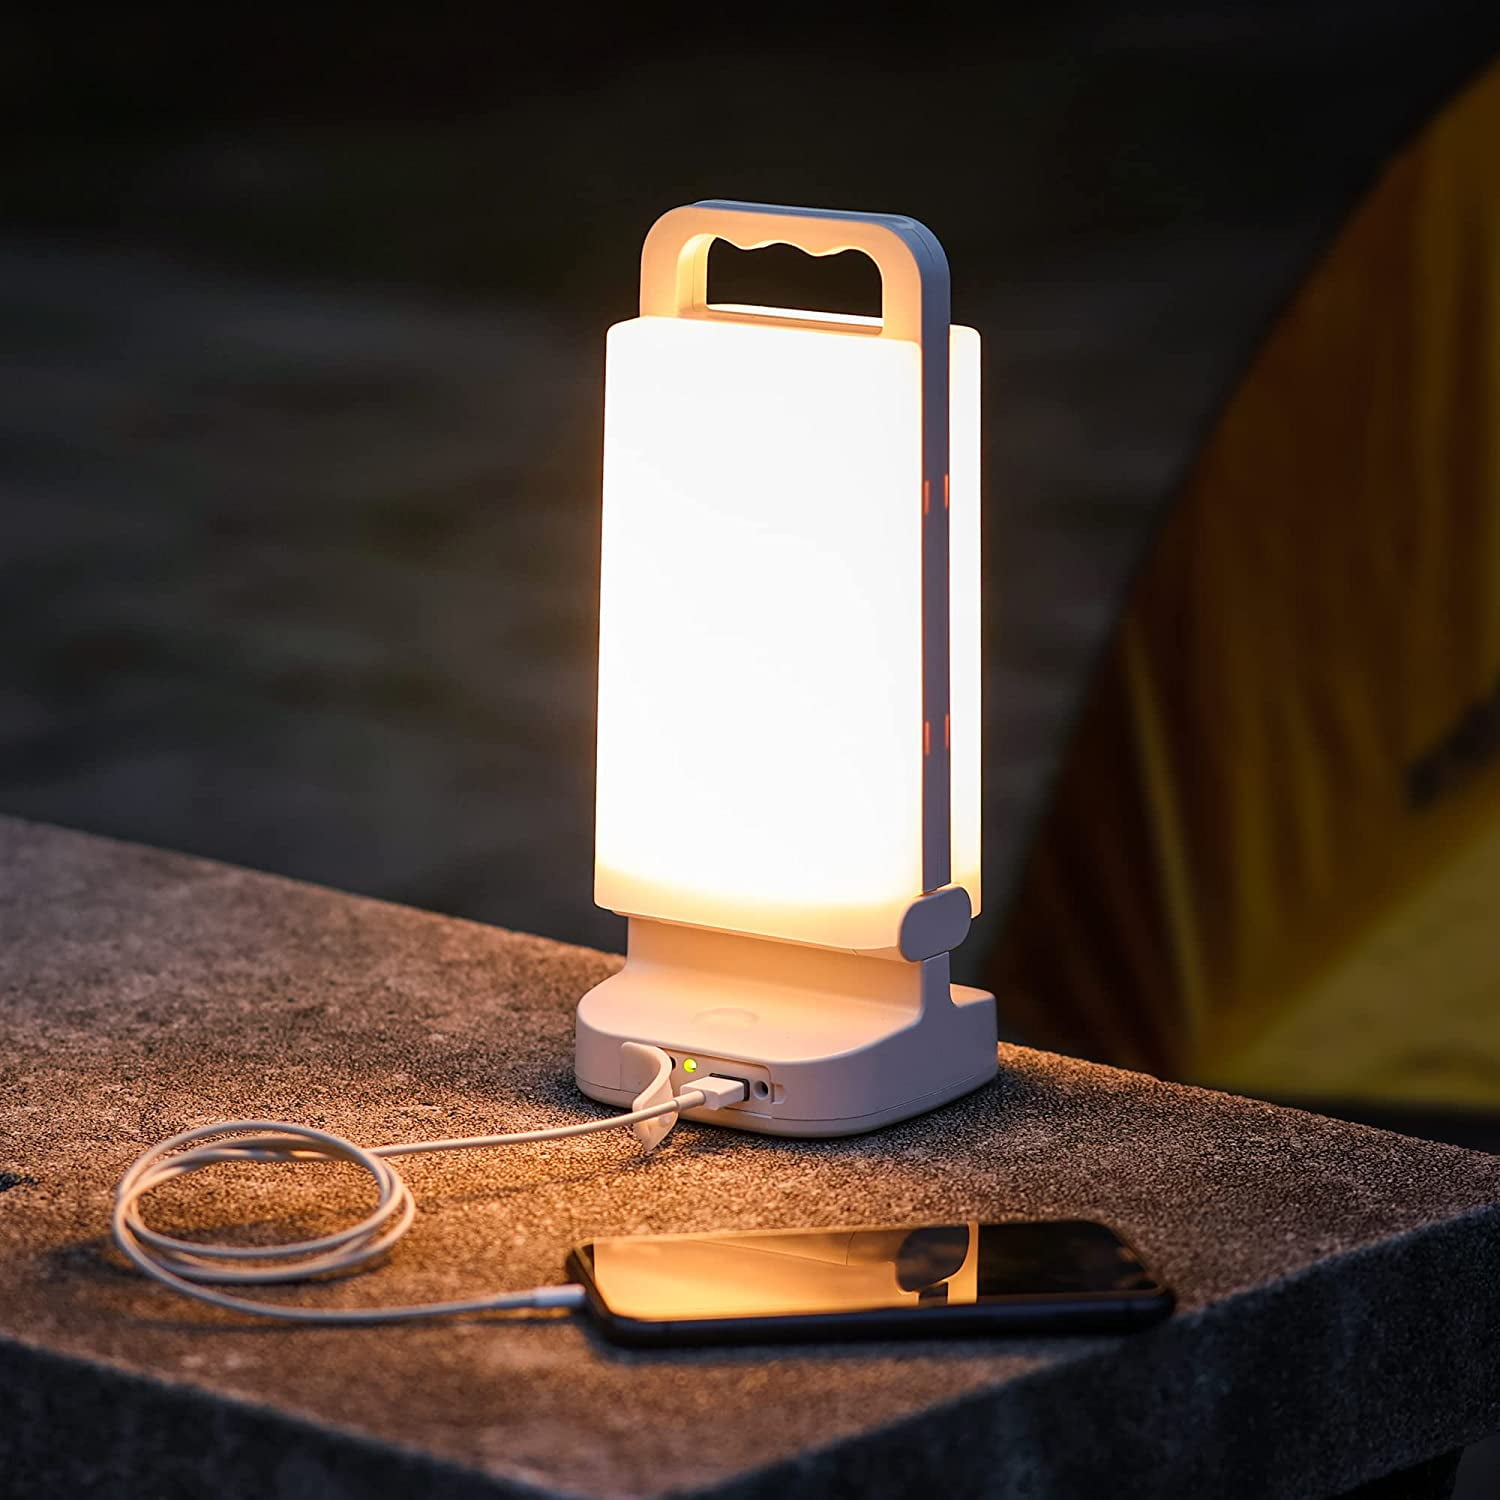 Portable Camping Lantern Waterproof 3 Lighting Modes Tent Light 1200mAh  Solar Powered USB Rechargeable Outdoor Indoor Nightlight